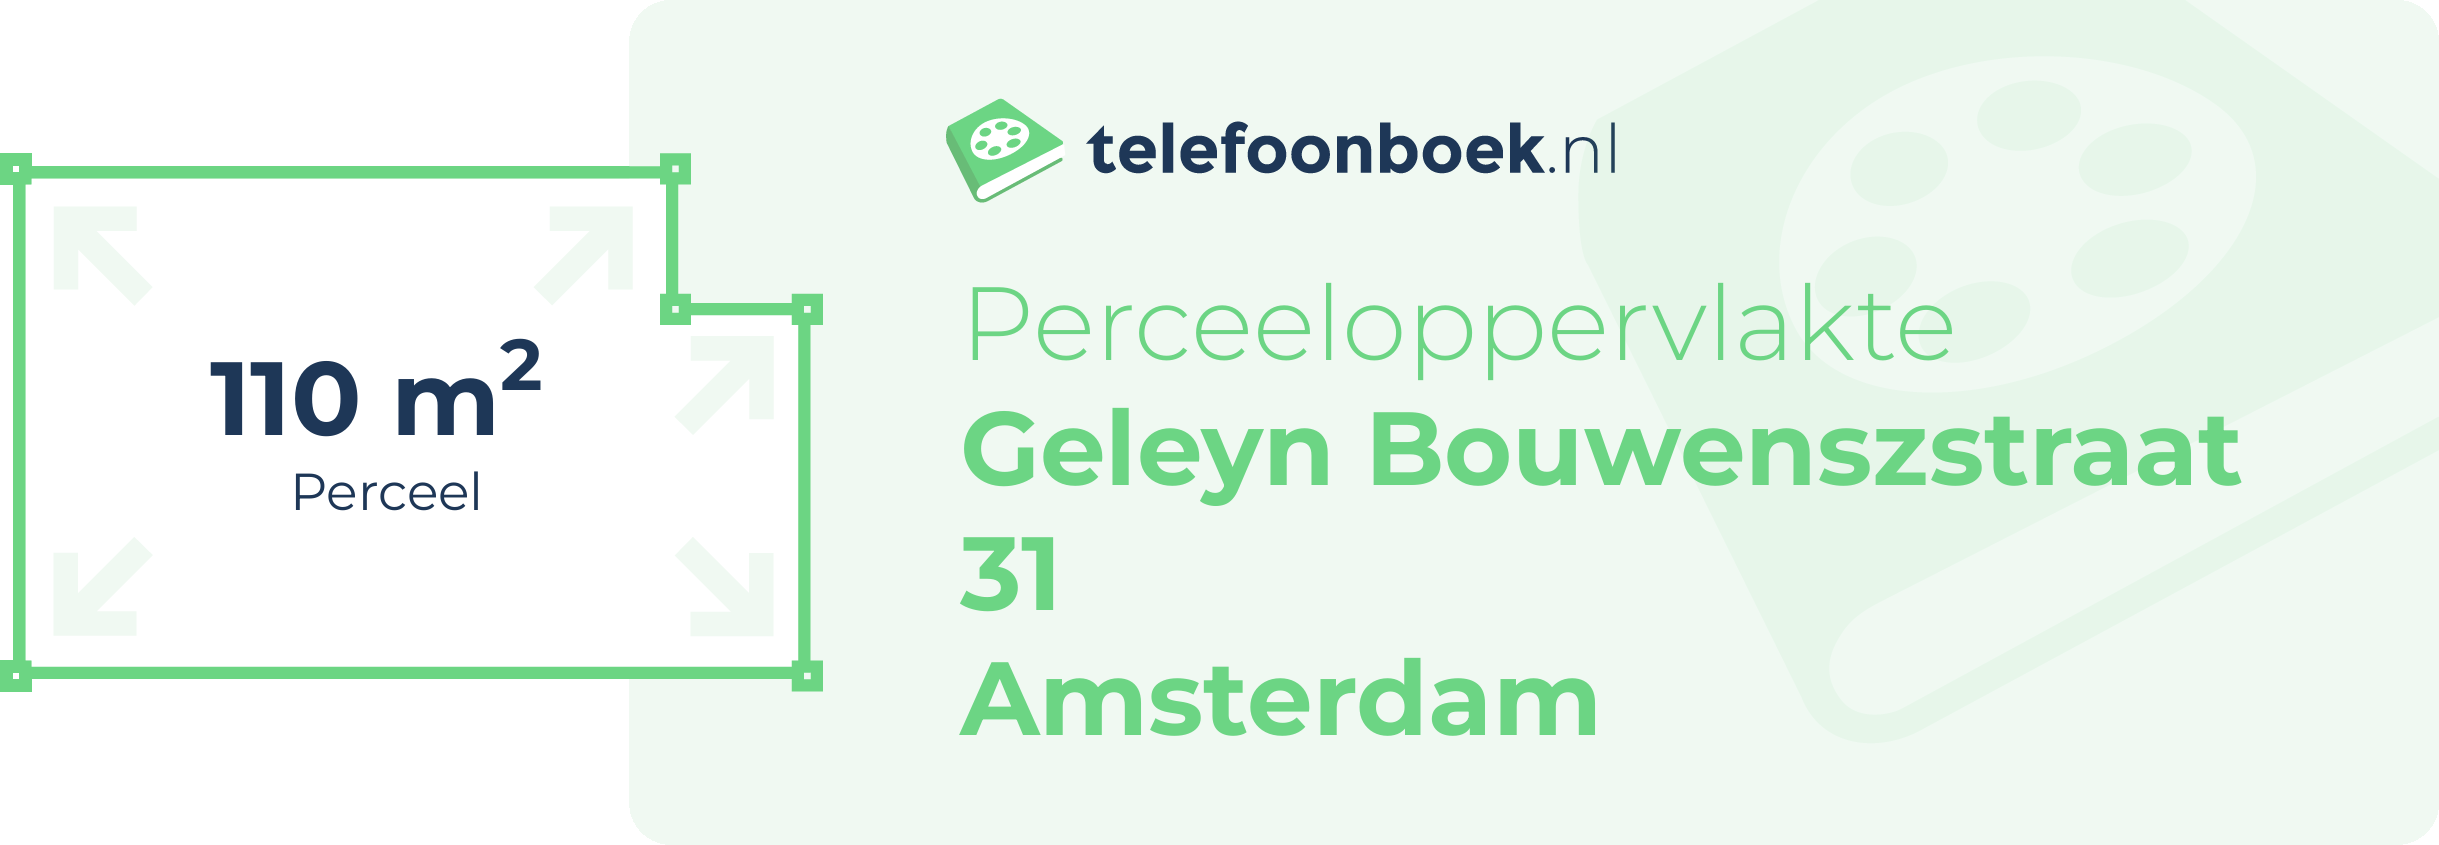 Perceeloppervlakte Geleyn Bouwenszstraat 31 Amsterdam